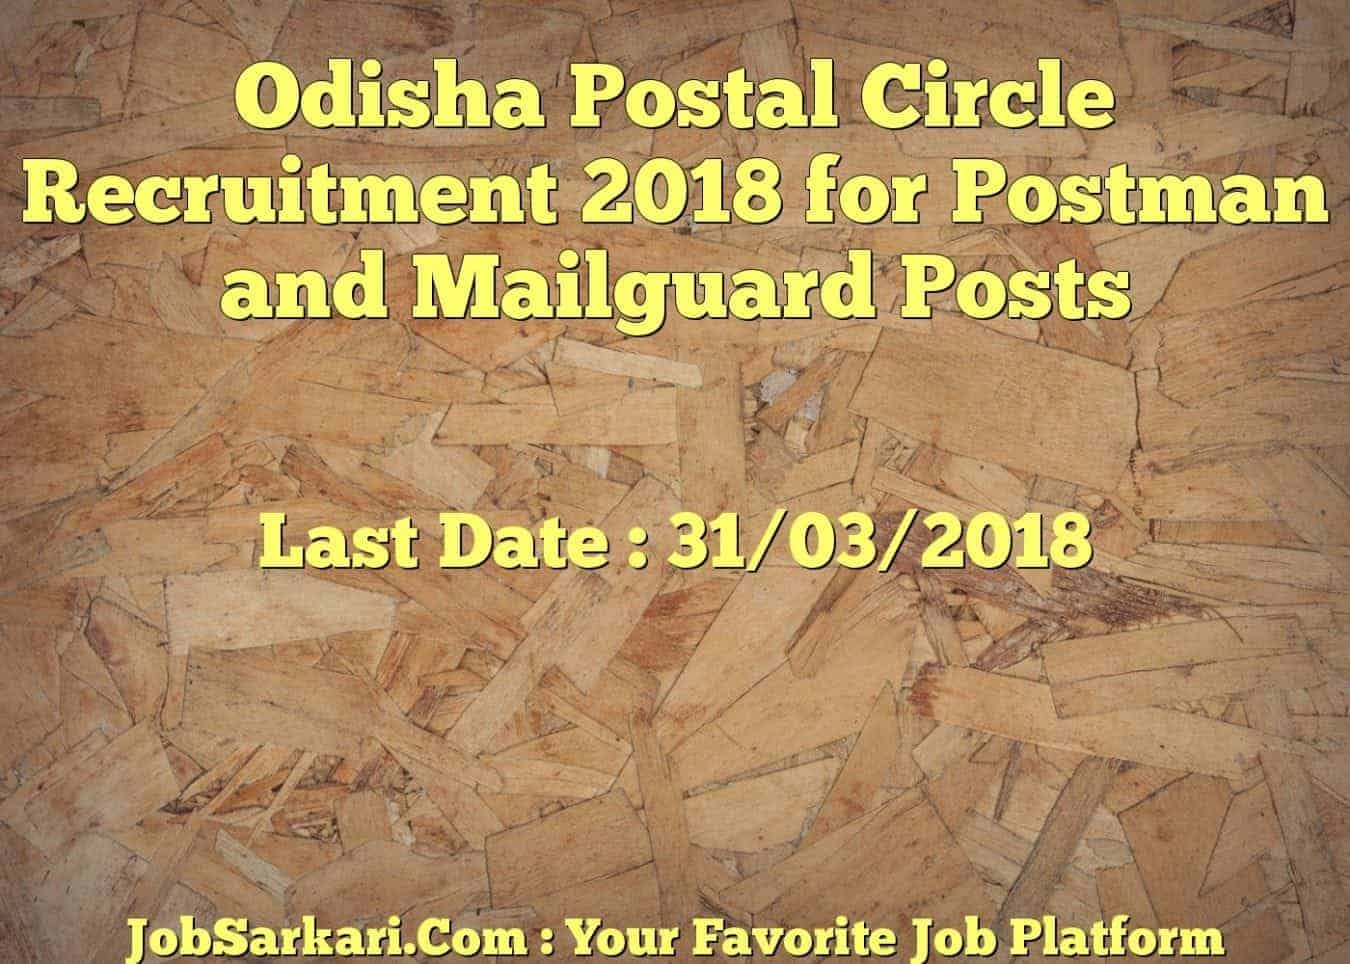 Odisha Postal Circle Recruitment 2018 for Postman and Mailguard Posts